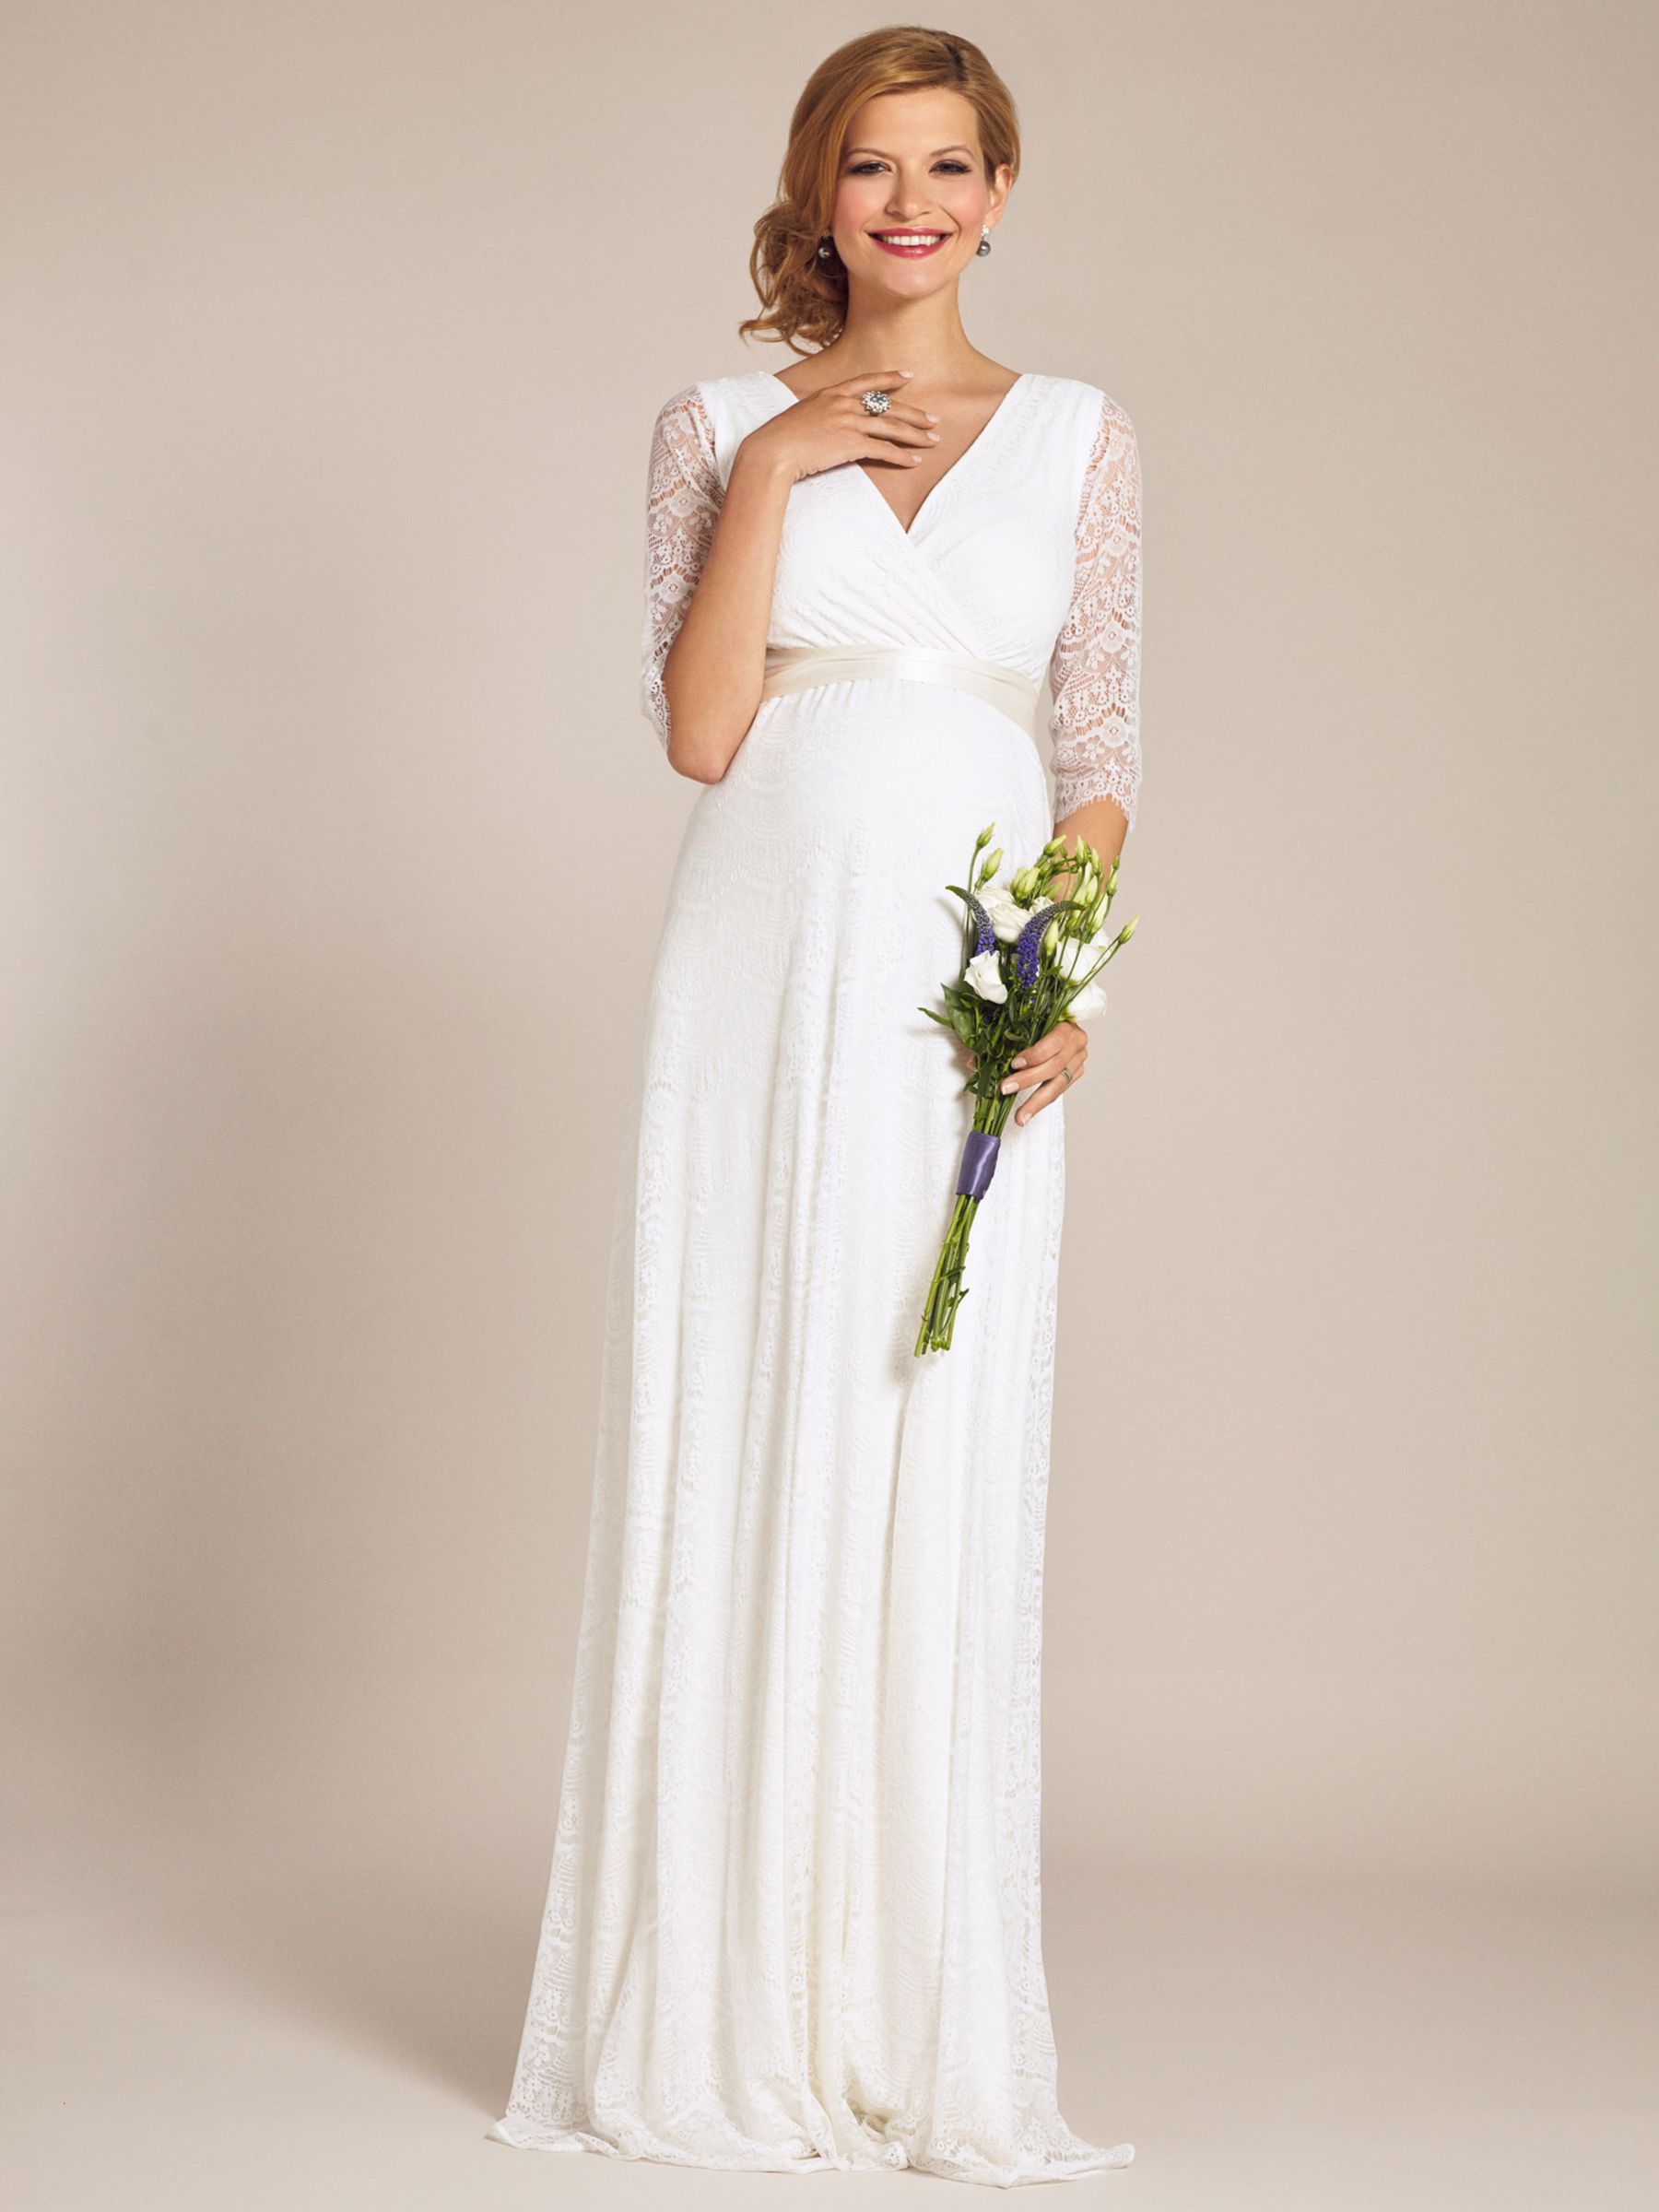 Tiffany Rose Amily Lace Maternity Wedding Dress, Ivory, 6-8